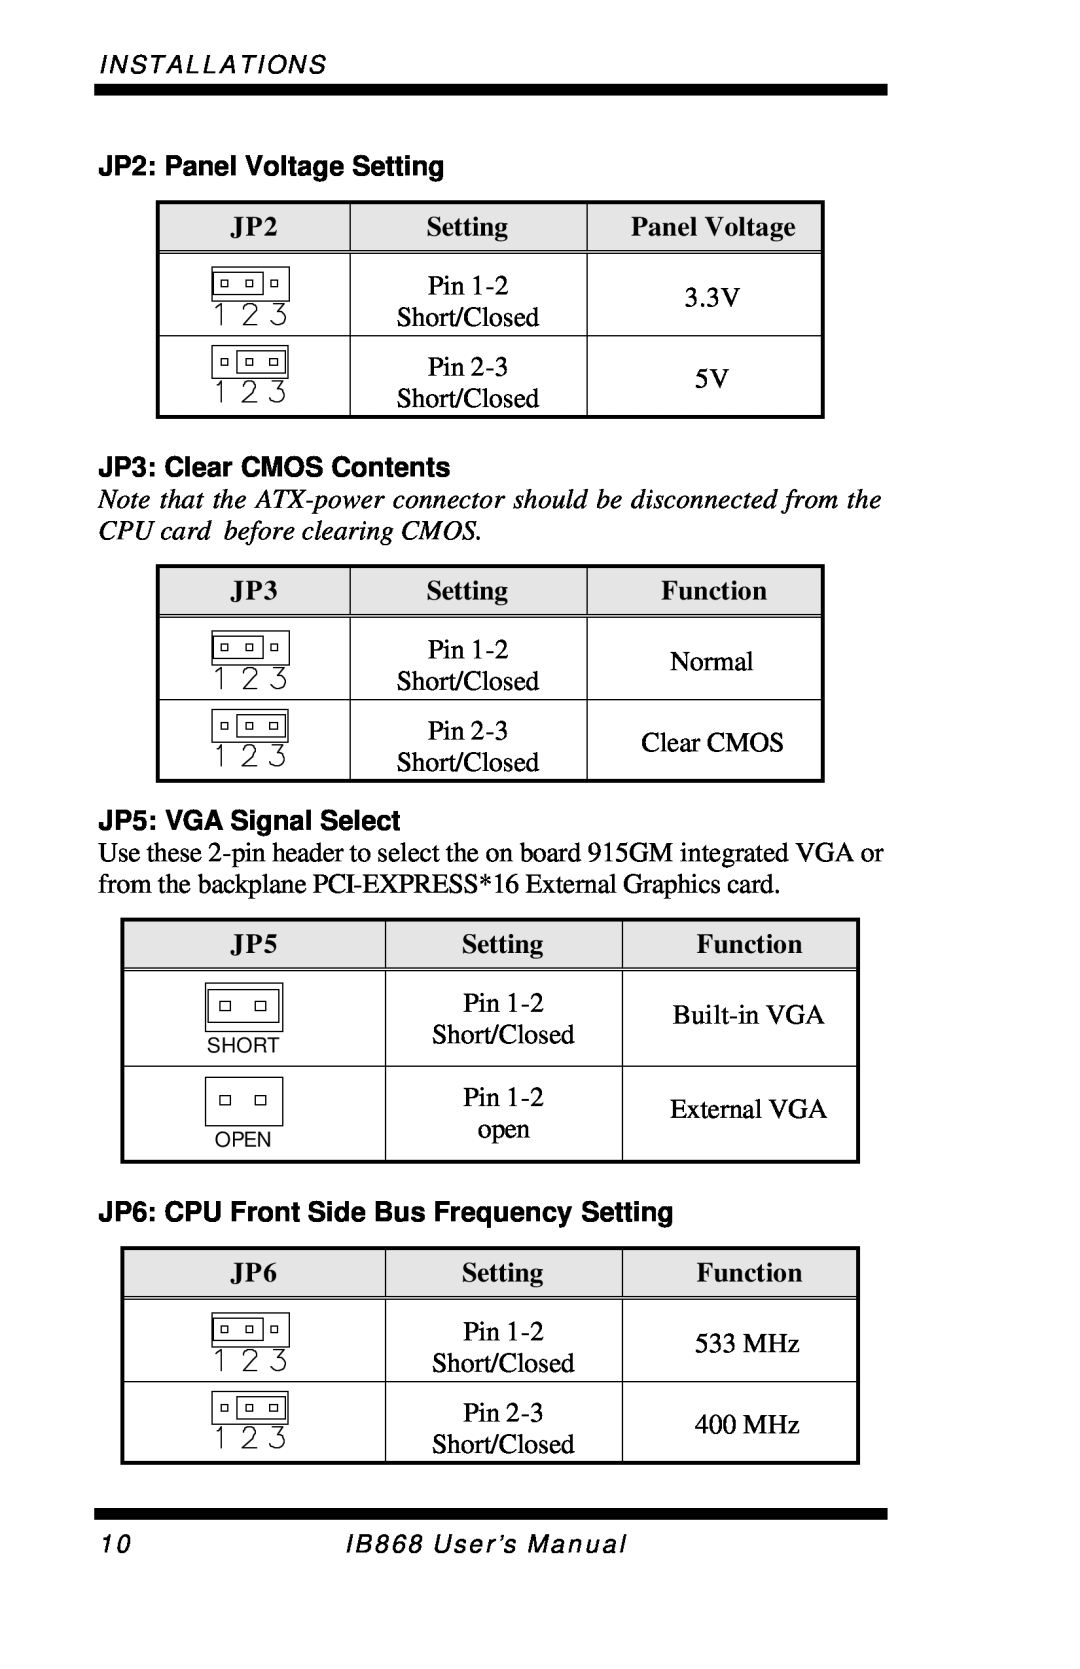 Intel IB868 user manual JP2: Panel Voltage Setting, JP3: Clear CMOS Contents, JP5: VGA Signal Select 